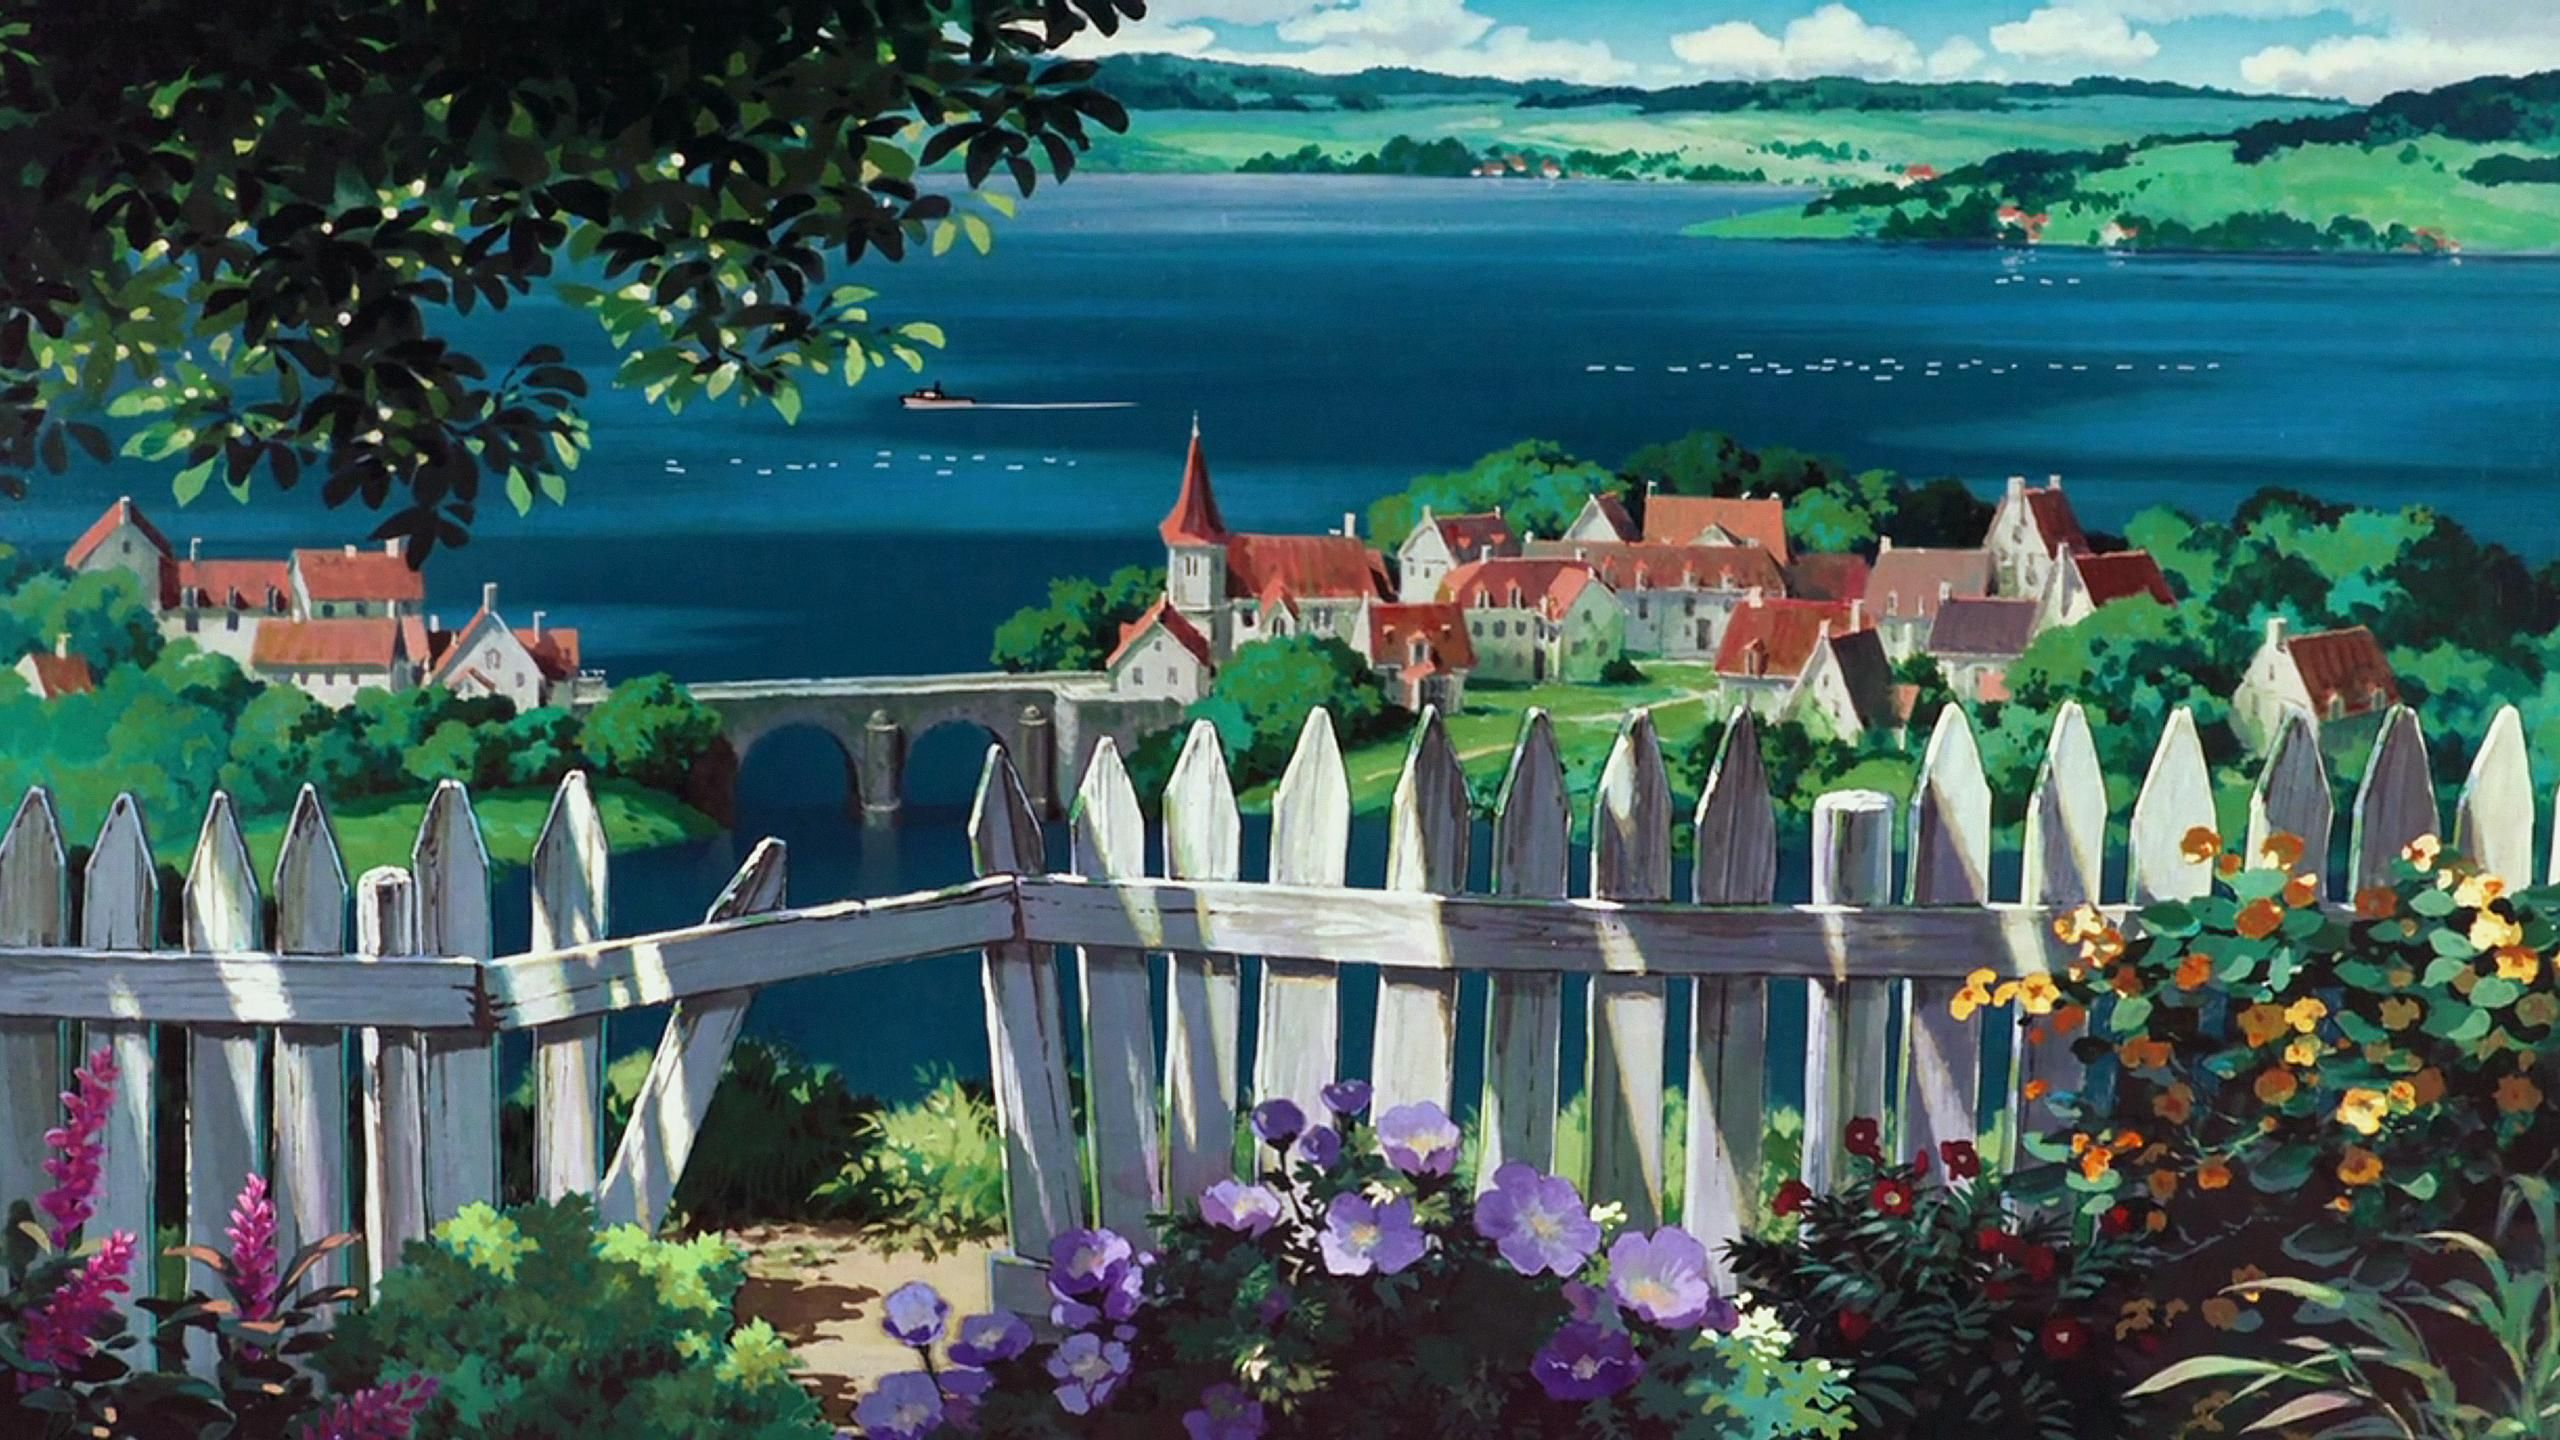 2560x1440 100 Studio Ghibli wallpapers Album on Imgur | Studio ghibli background, Anime scenery, Ghibli artwork